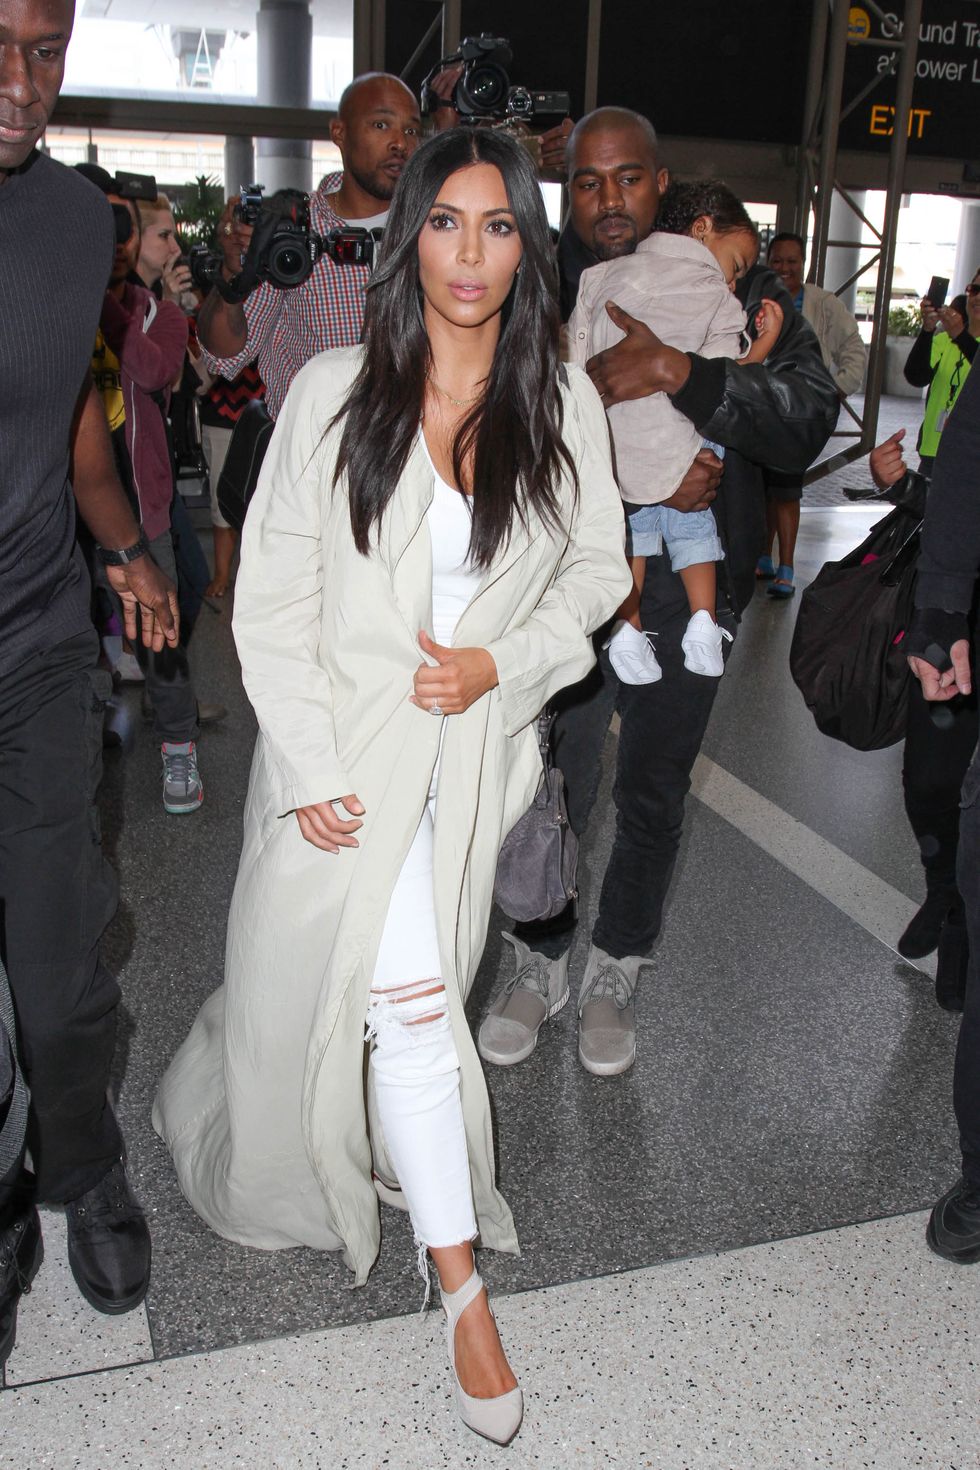 Kim Kardashian wearing cream duster coat in the airport